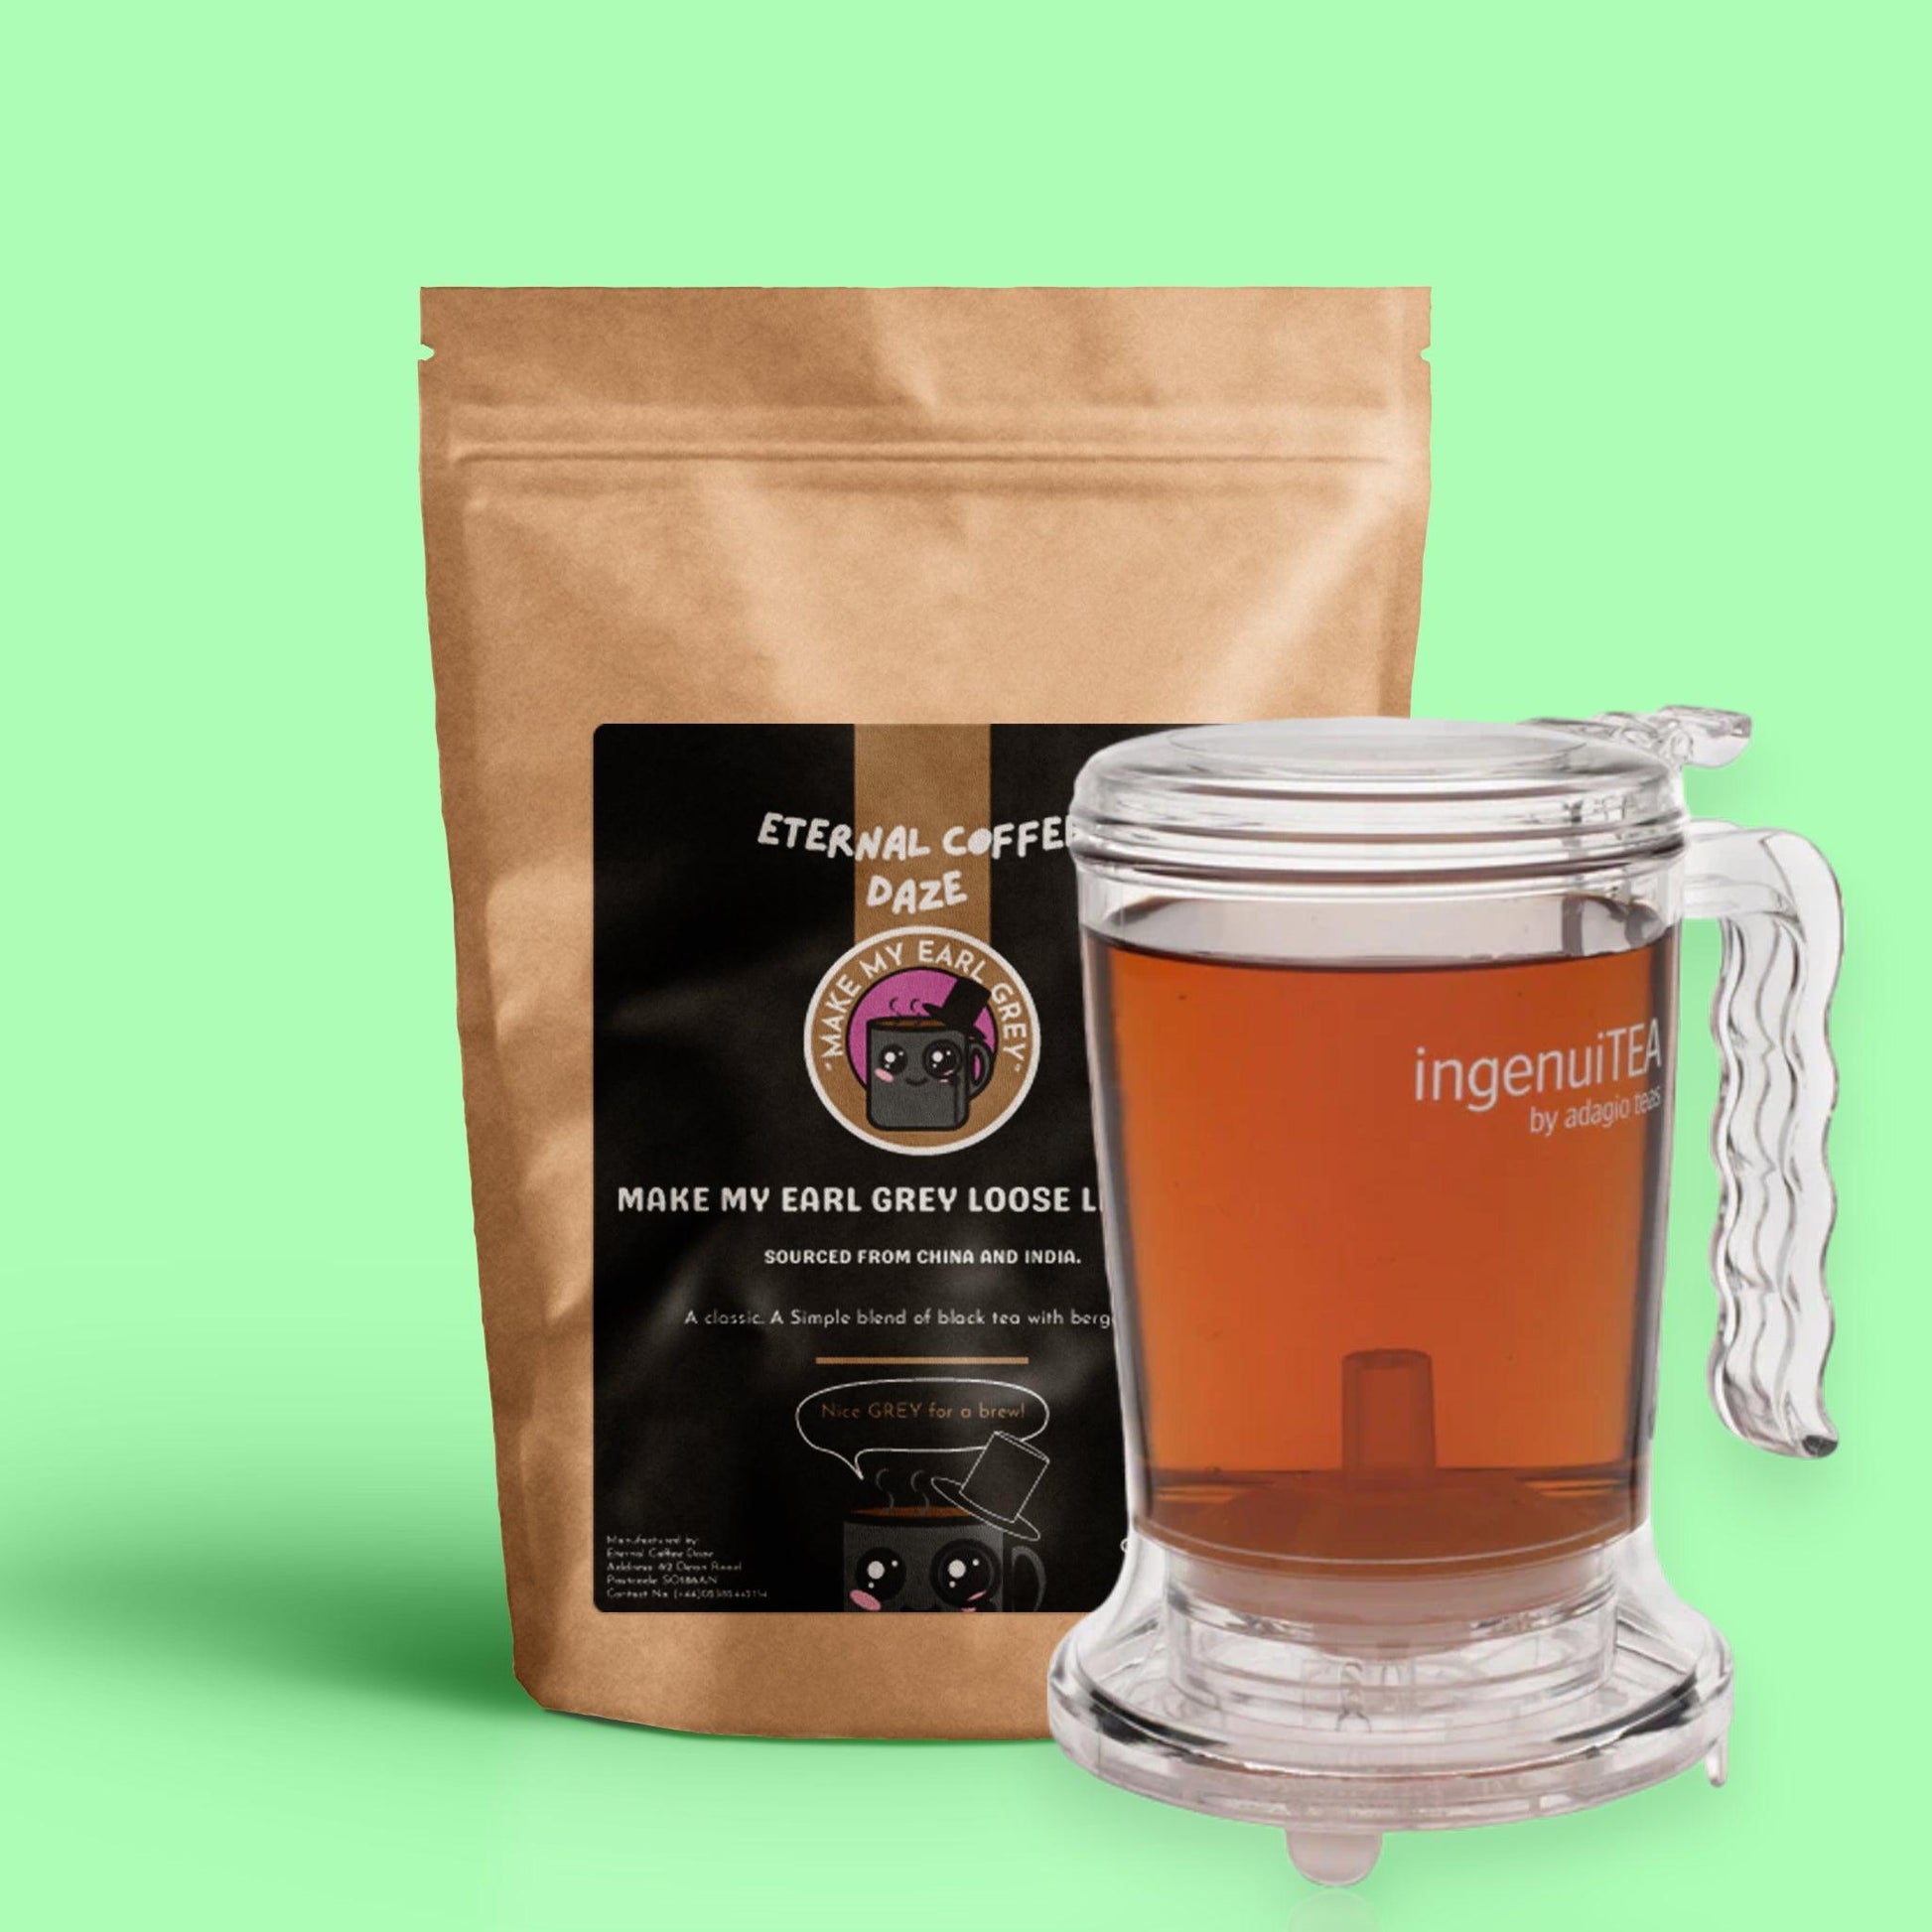 IngenuiTea and Loose Leaf Tea Bundle - Eternal Coffee Daze